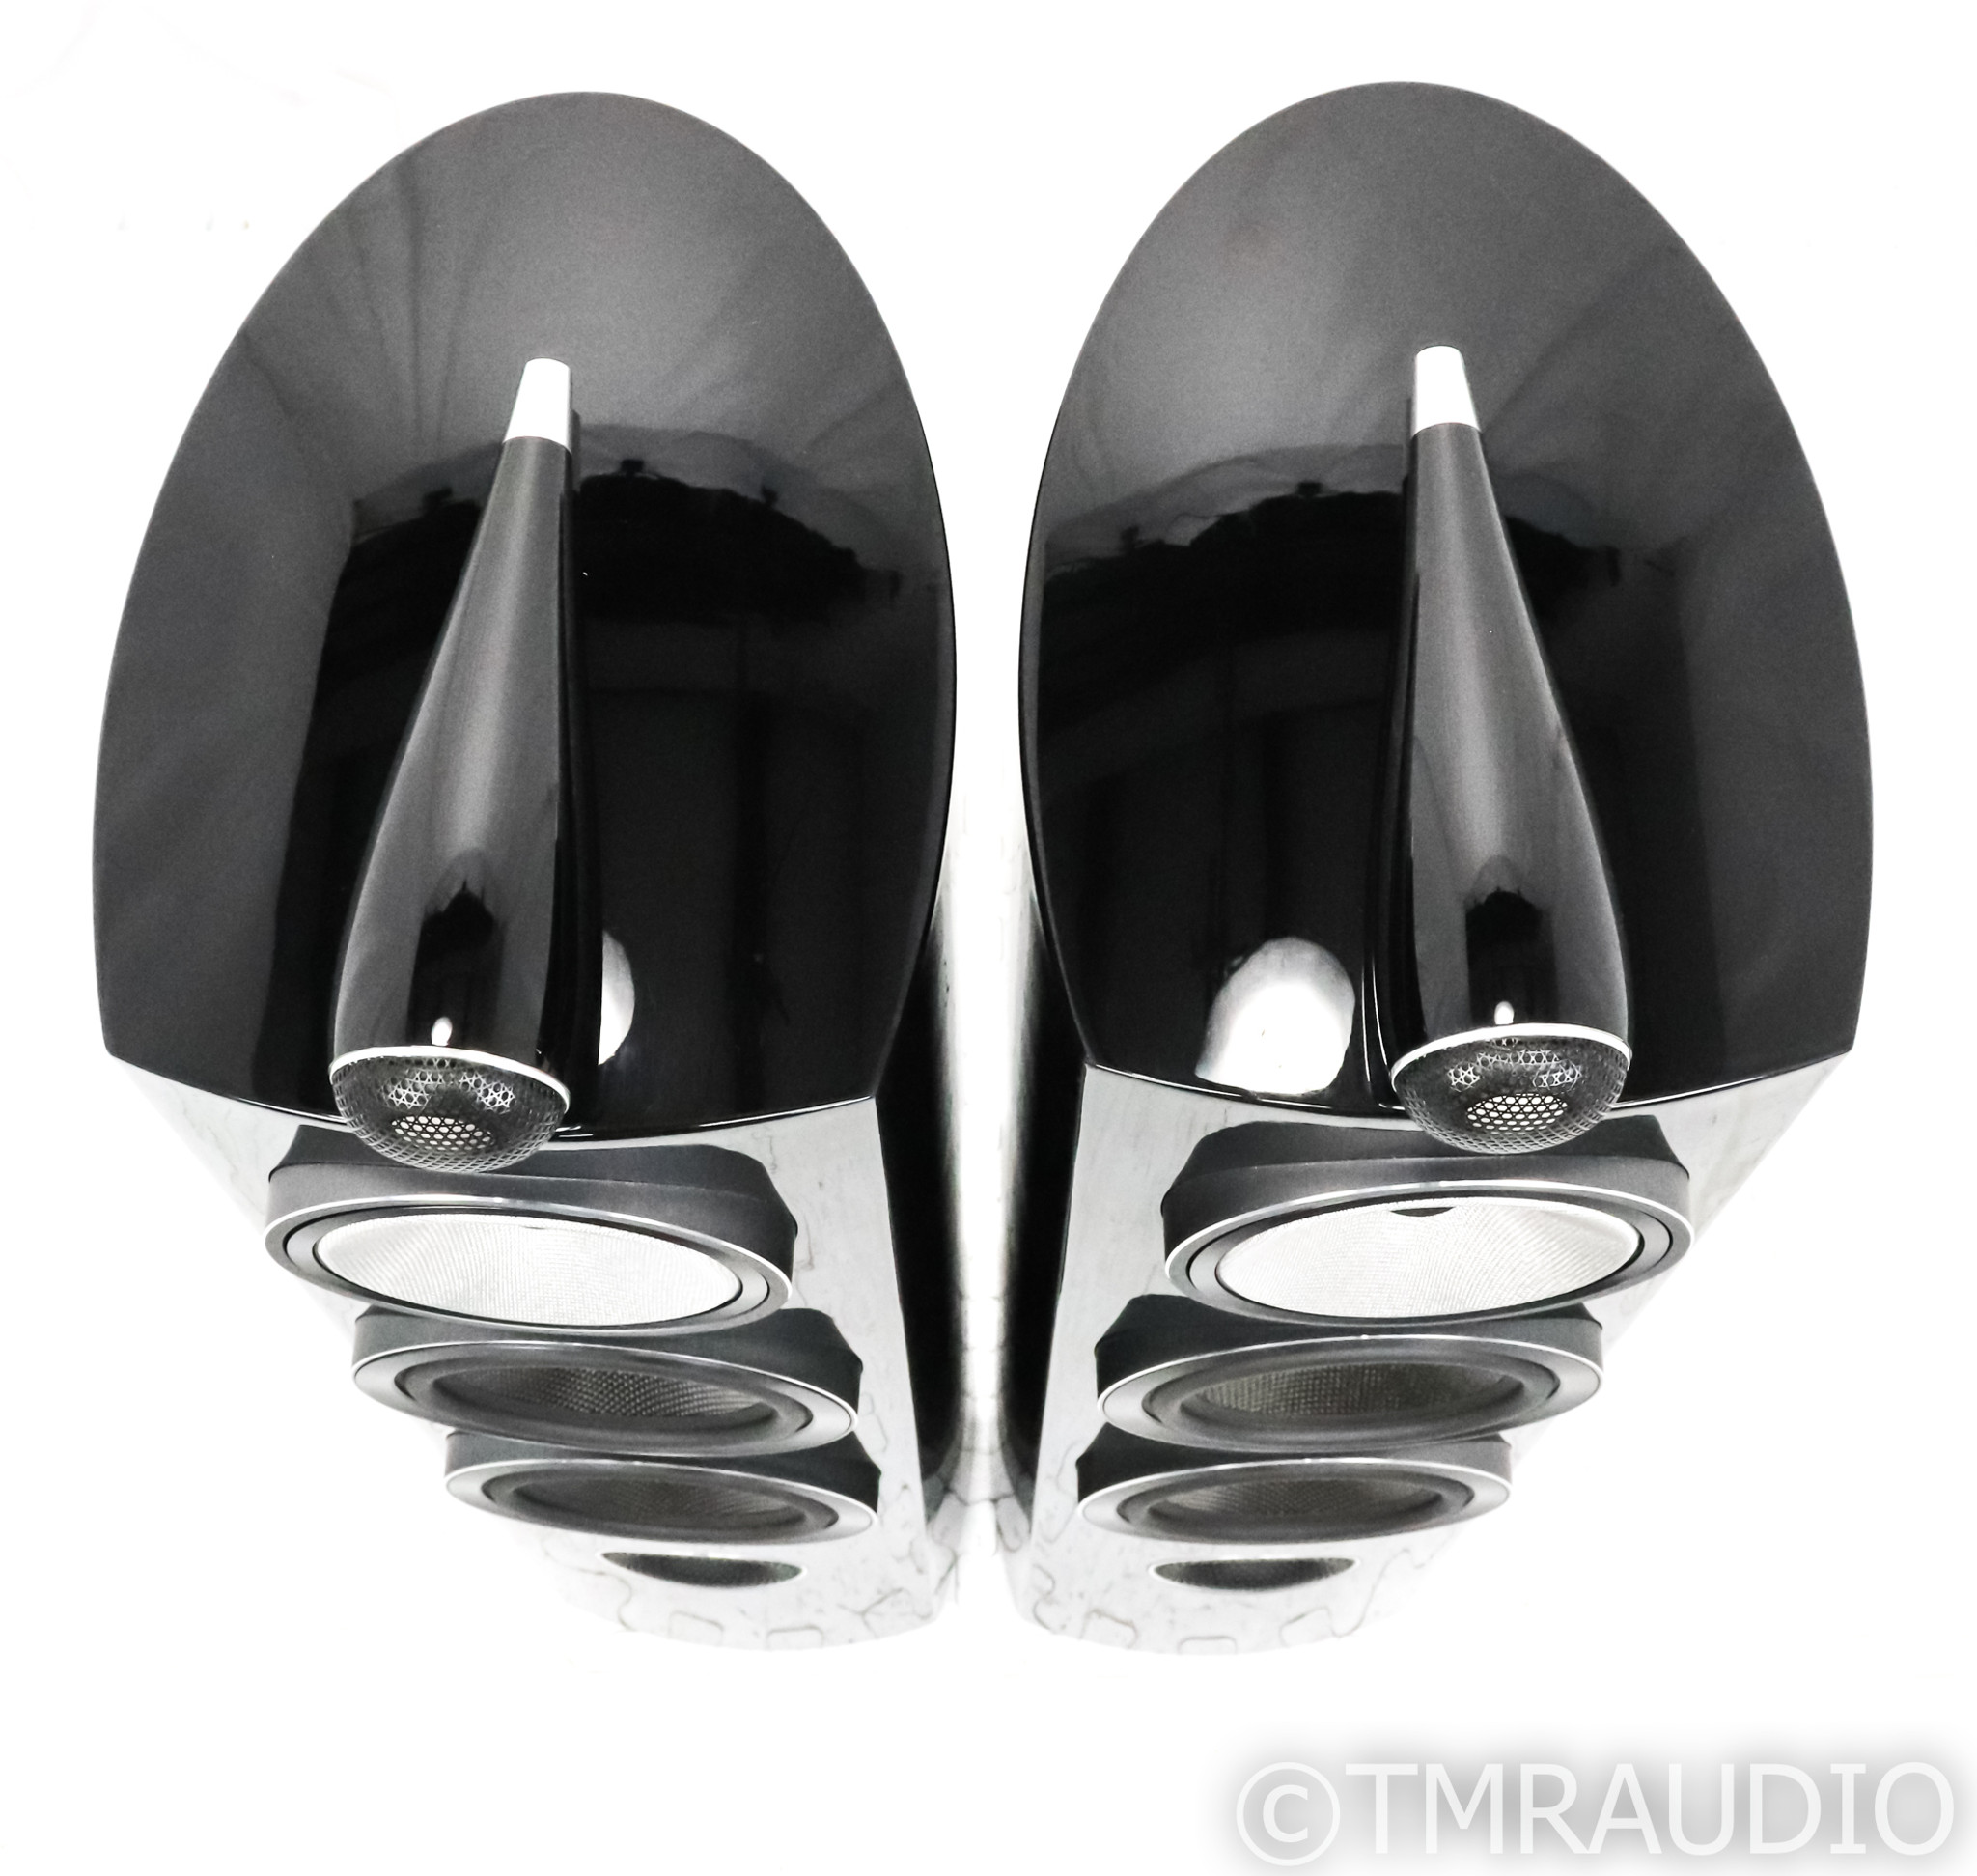 Bowers & Wilkins 804 D3 Speakers In Gloss Black - Like New